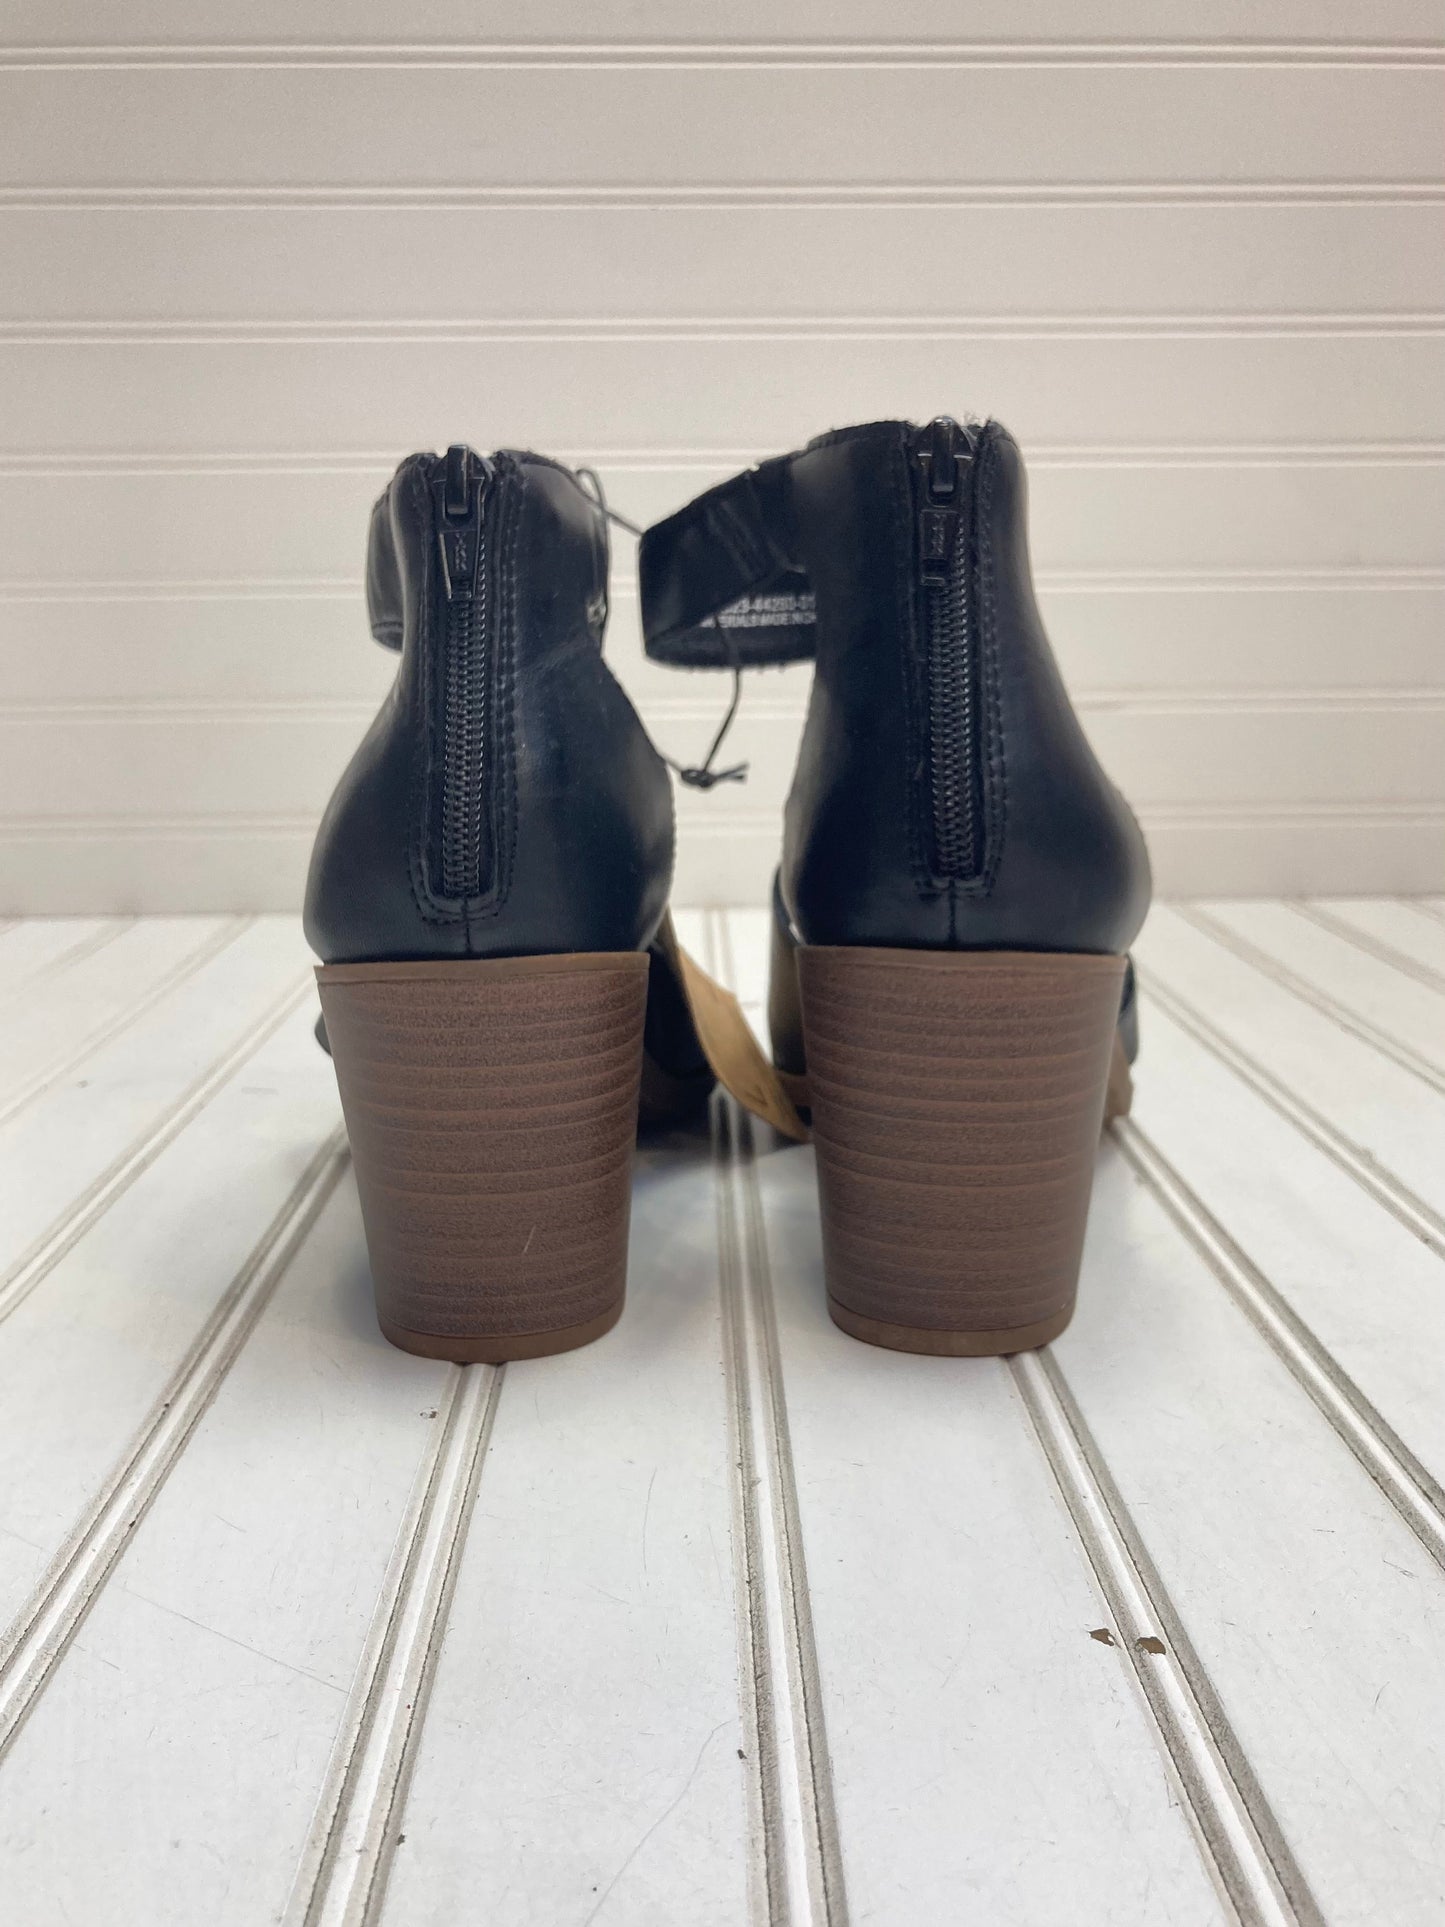 Black & Brown Sandals Heels Block Frye And Co, Size 9.5